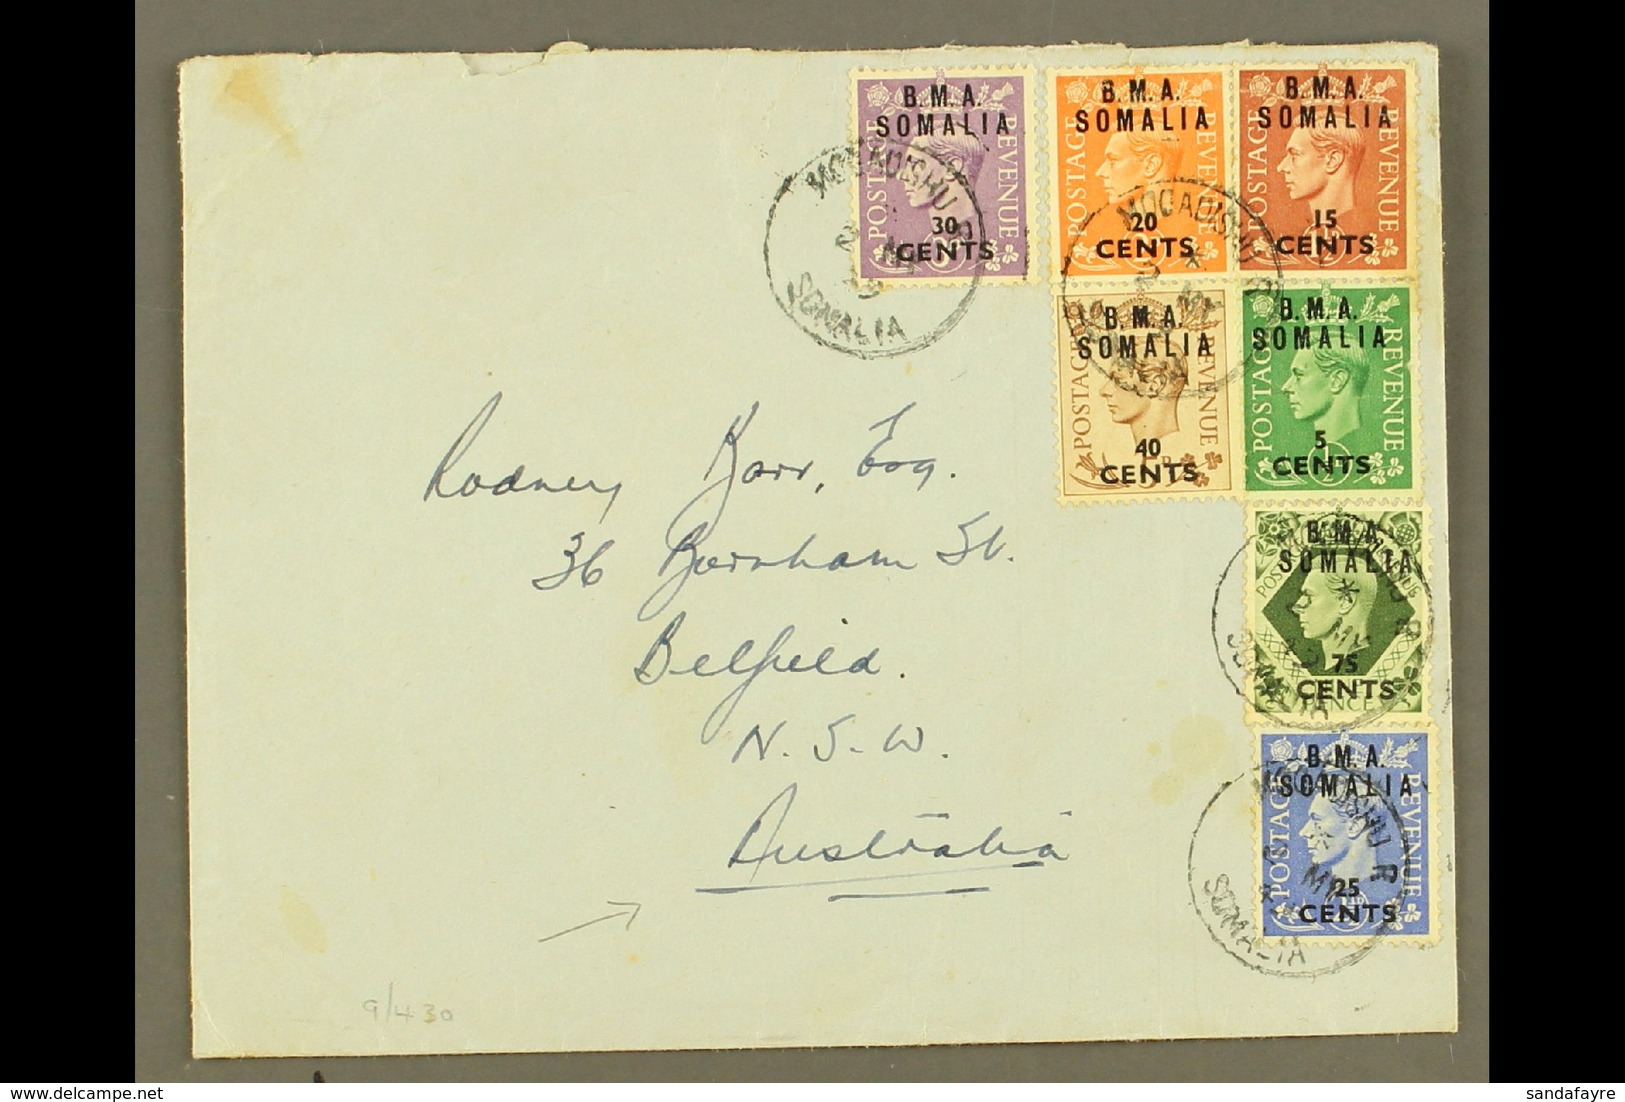 SOMALIA 1949 Plain Envelope To Australia, Franked KGVI 5c On ½d To 40c On 5d & 75c On 9d "B.M.A. SOMALIA" Ovpts, SG S10/ - Italiaans Oost-Afrika